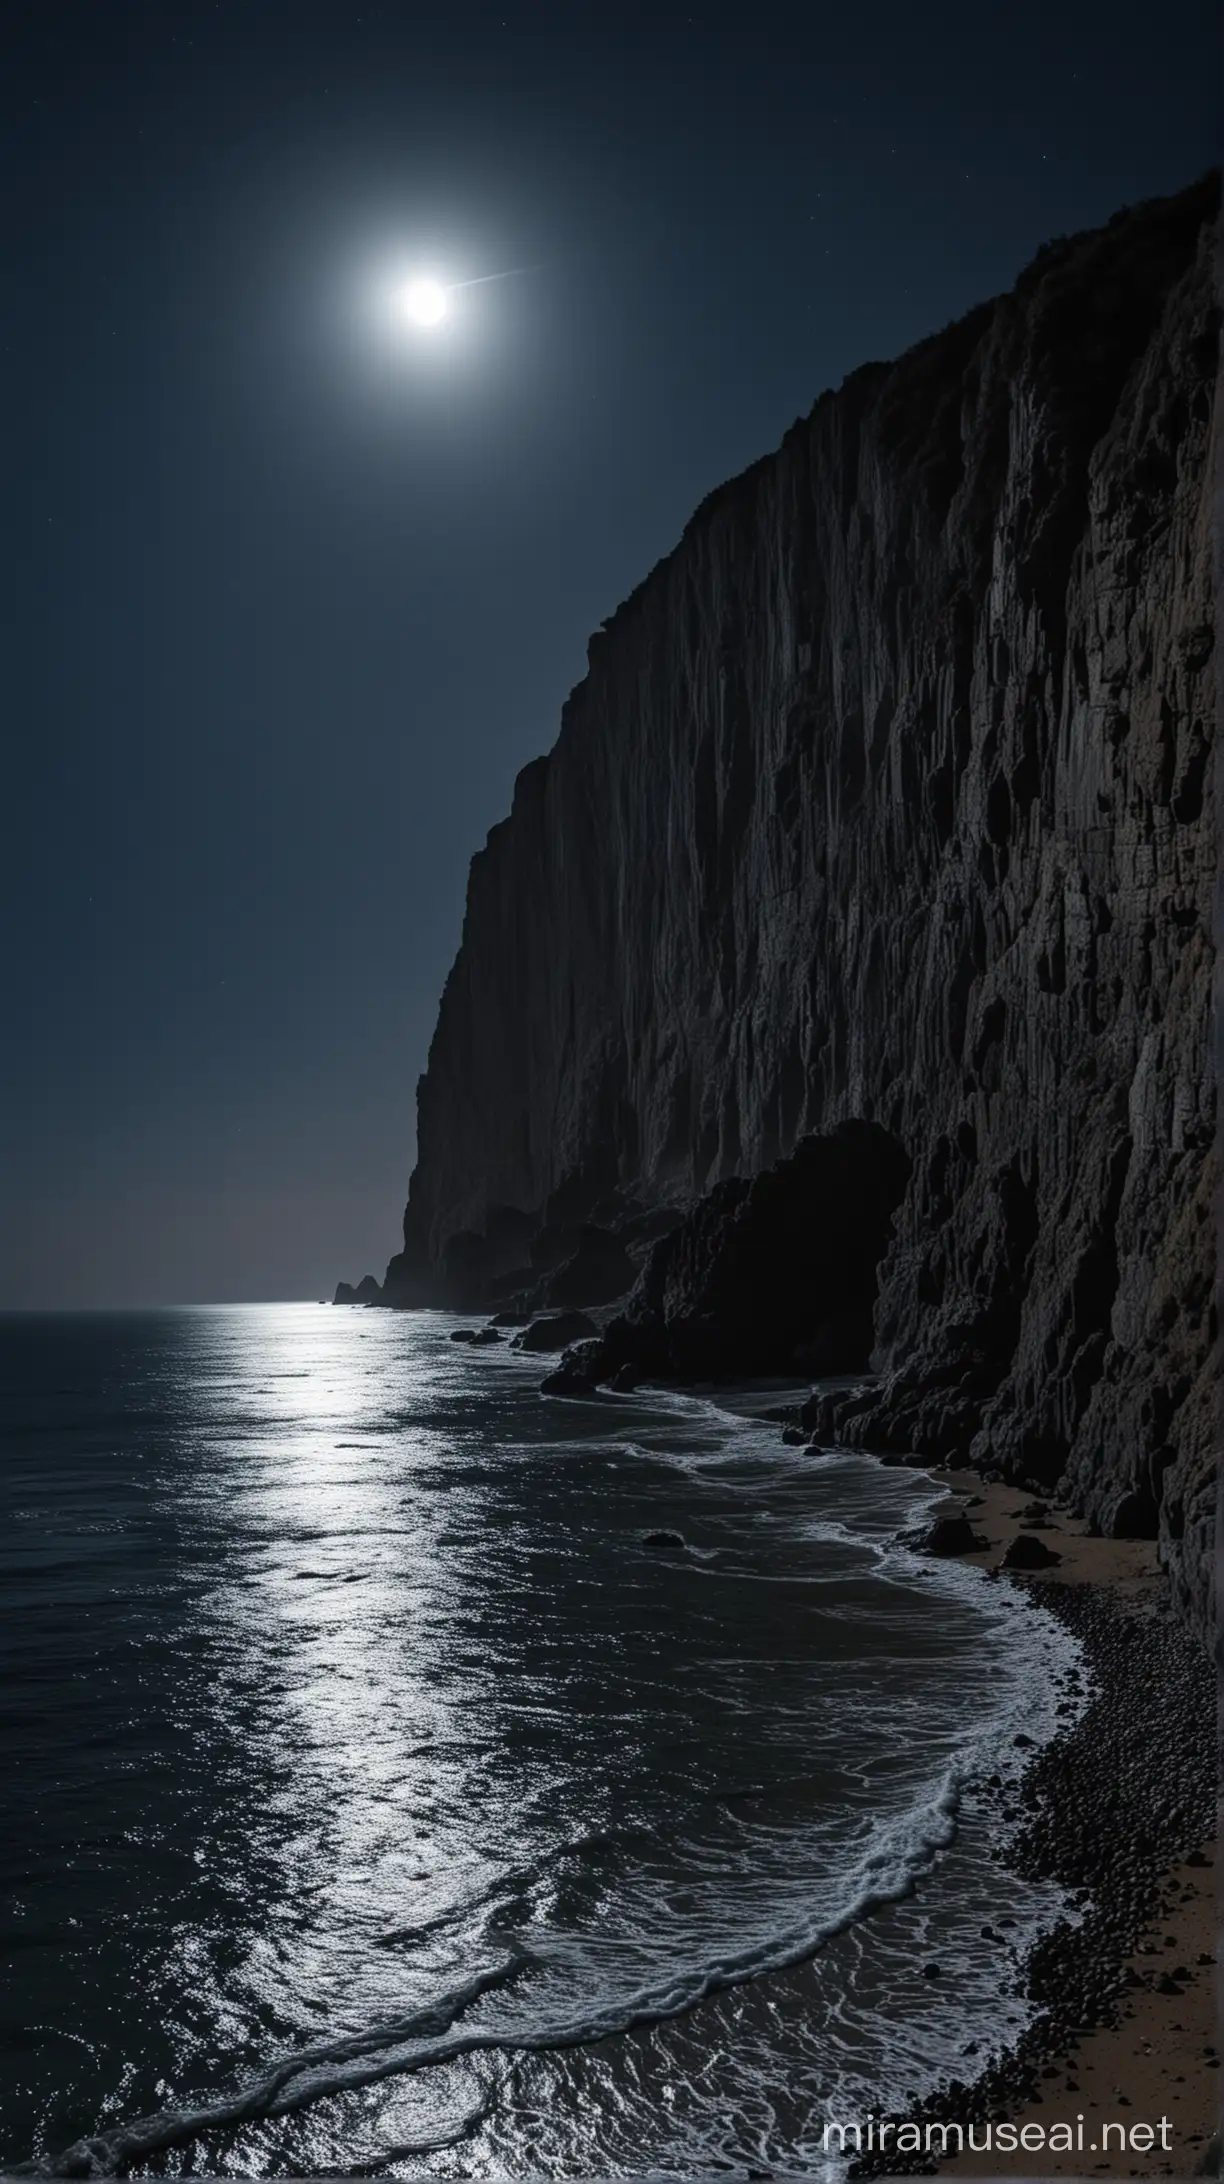 Moonlit Cliff Shore at Night